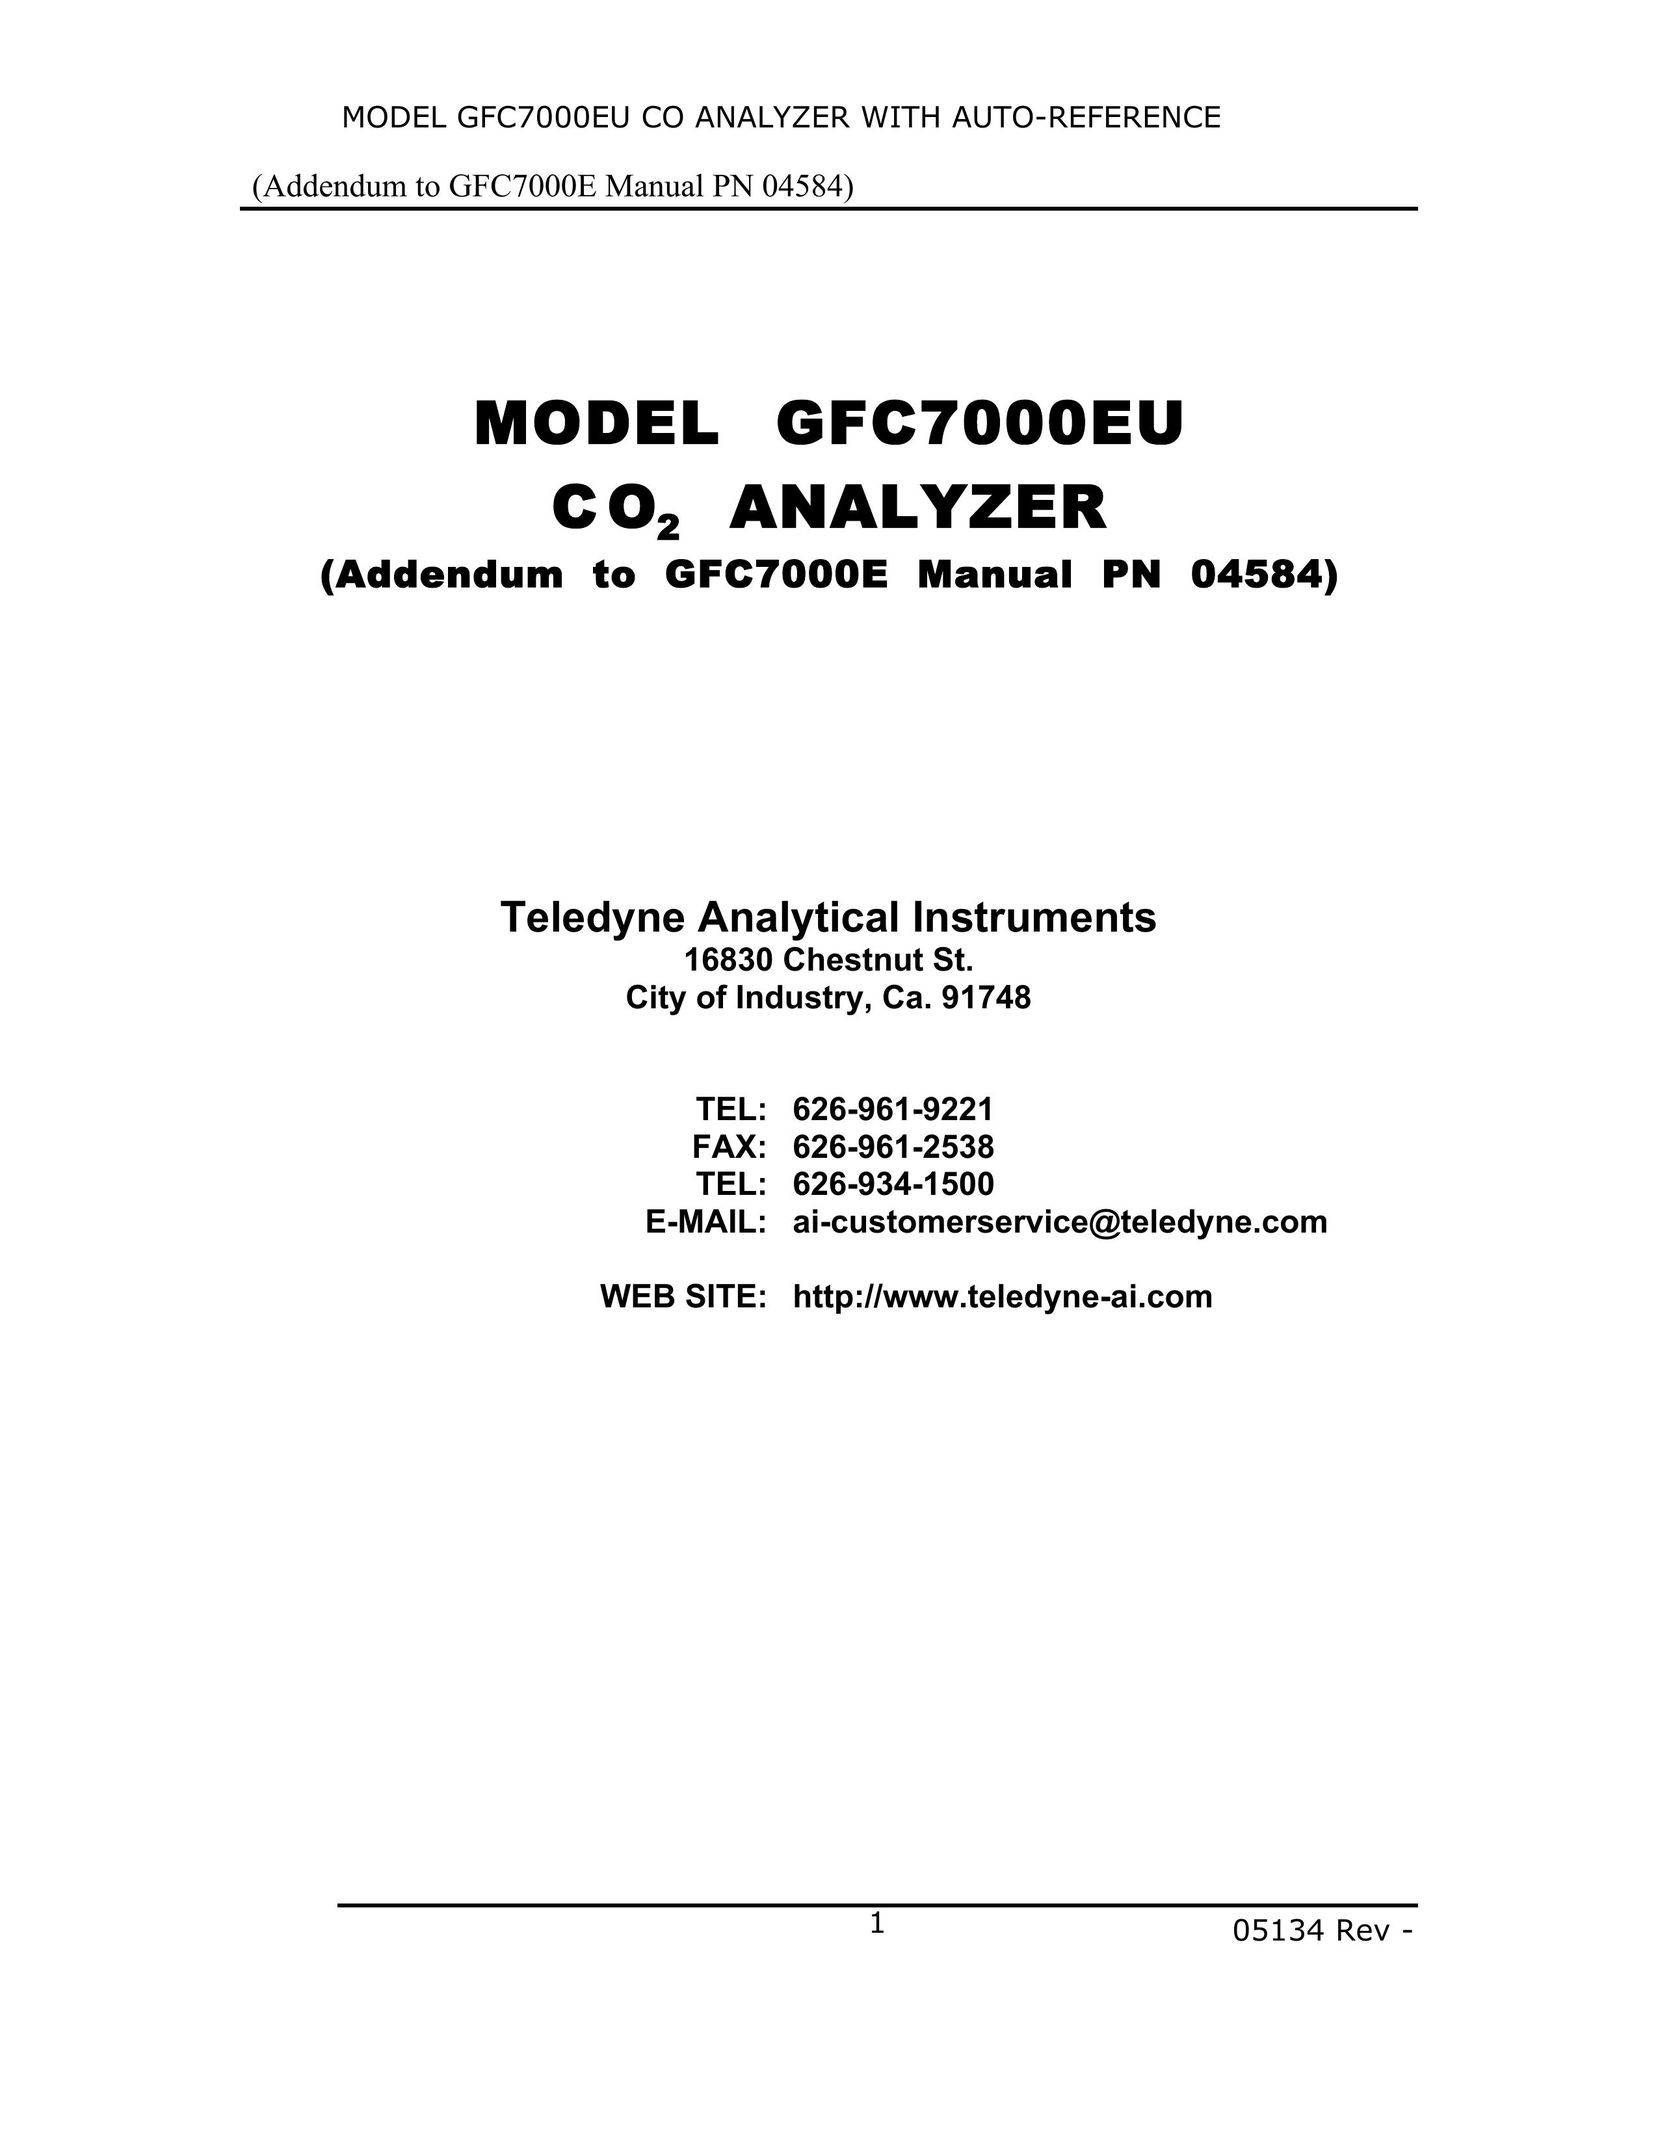 Teledyne GFC7000EU Carbon Monoxide Alarm User Manual